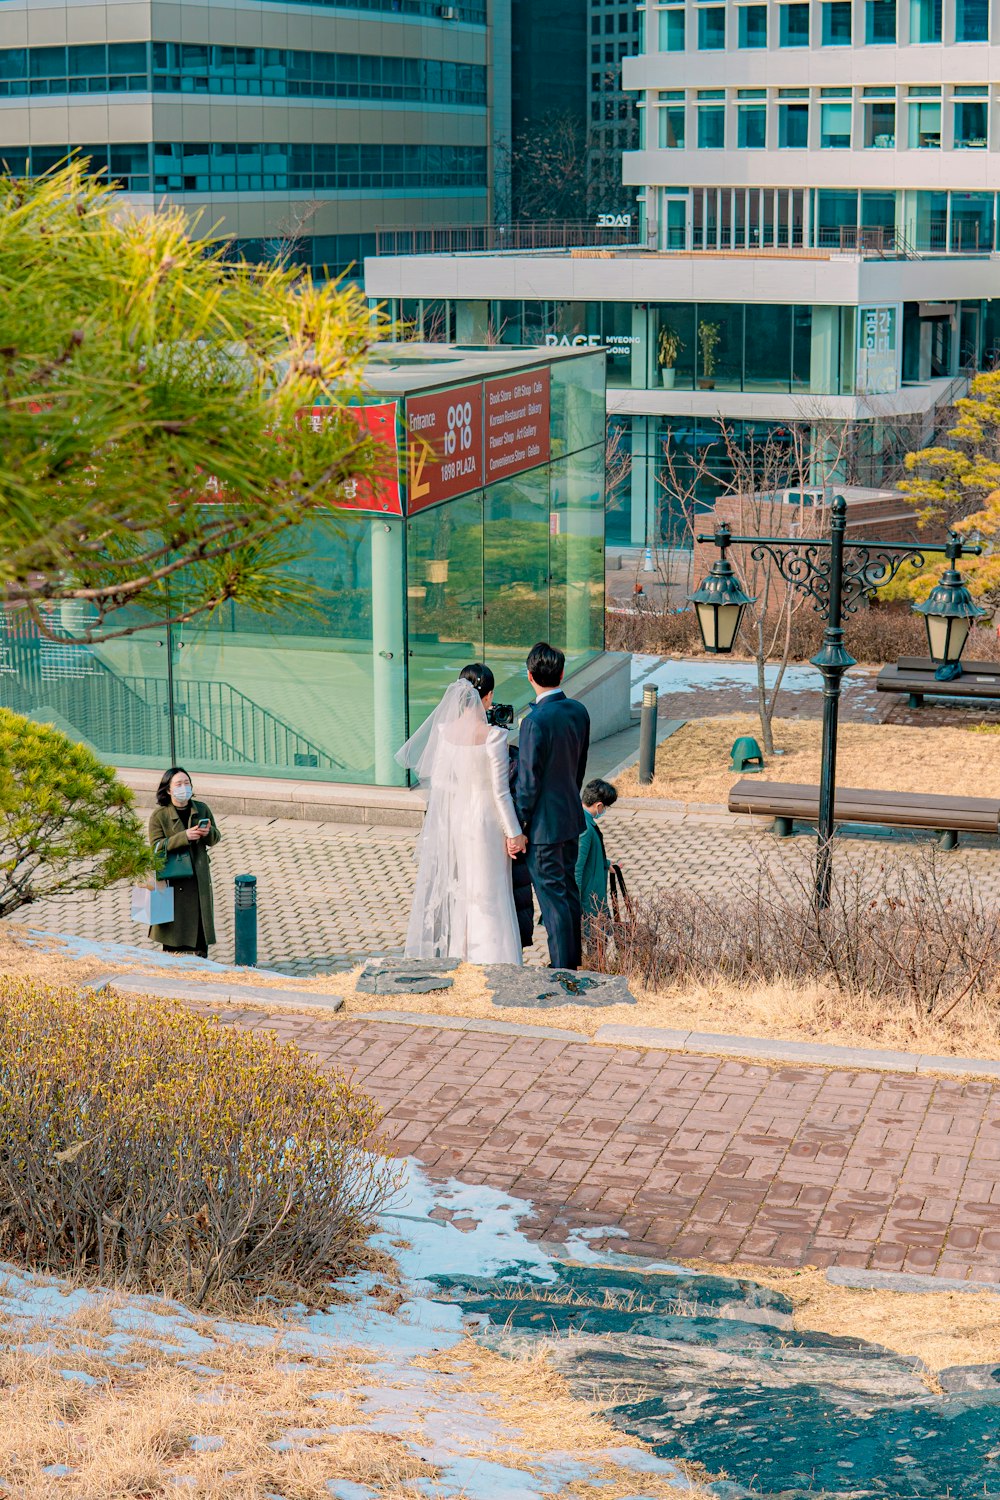 woman in white wedding gown walking on sidewalk during daytime